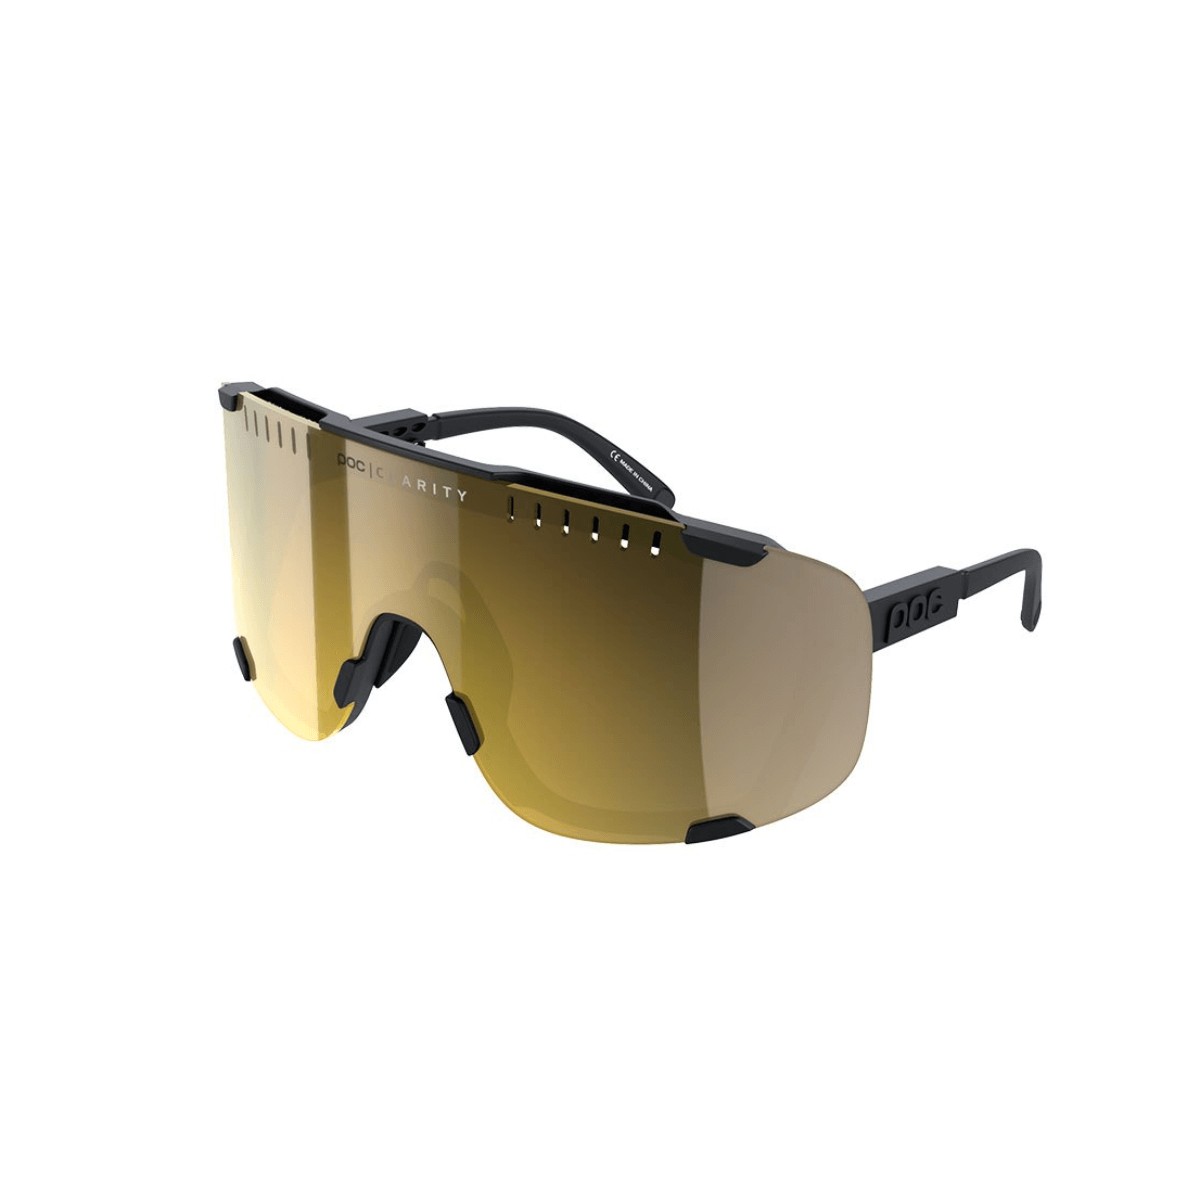 Gafas Negro lentes Dorado | Mejor precio